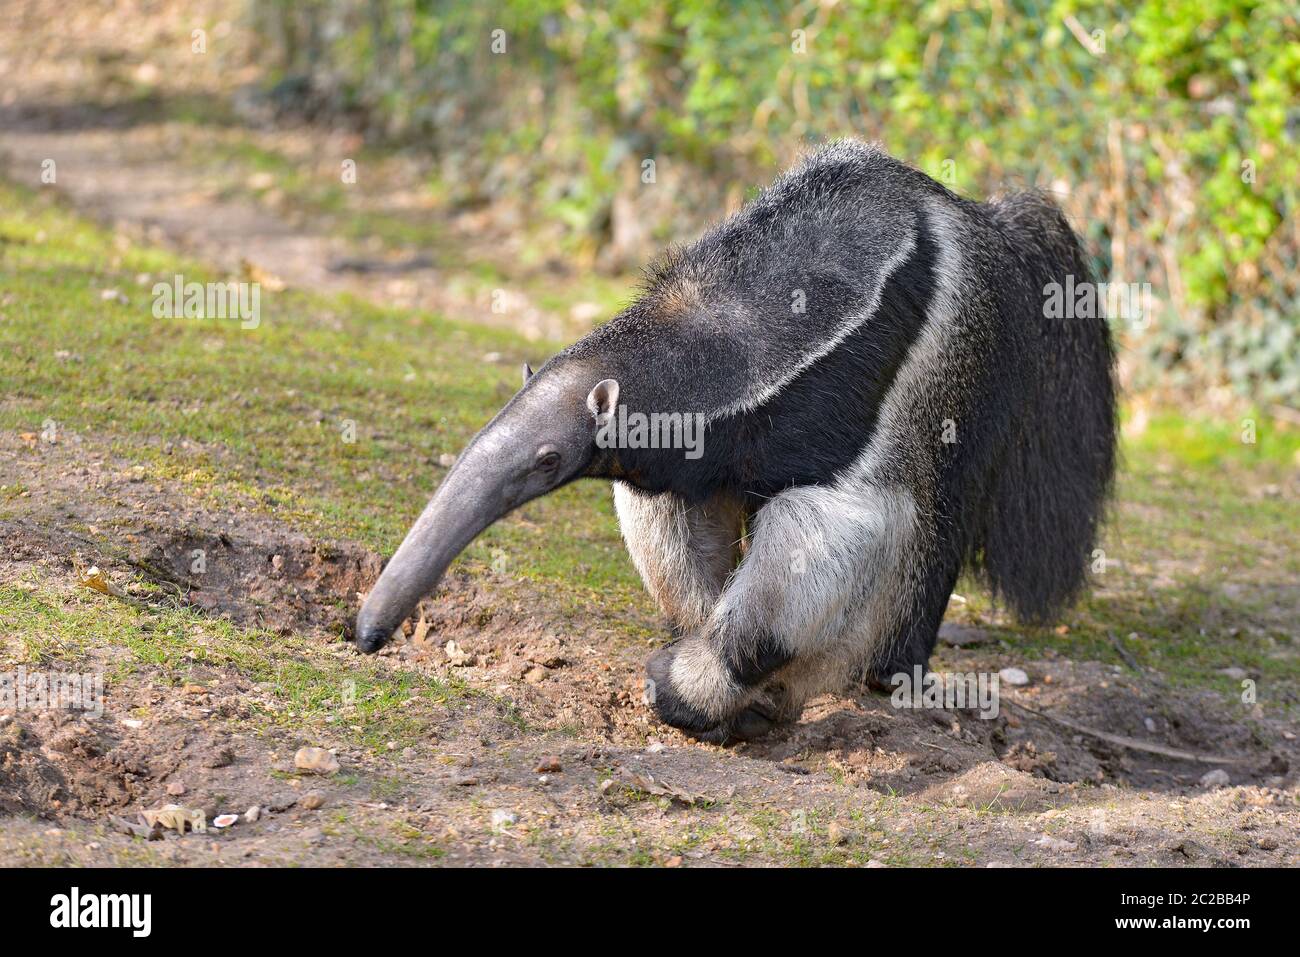 Giant Anteater walking on grass Stock Photo